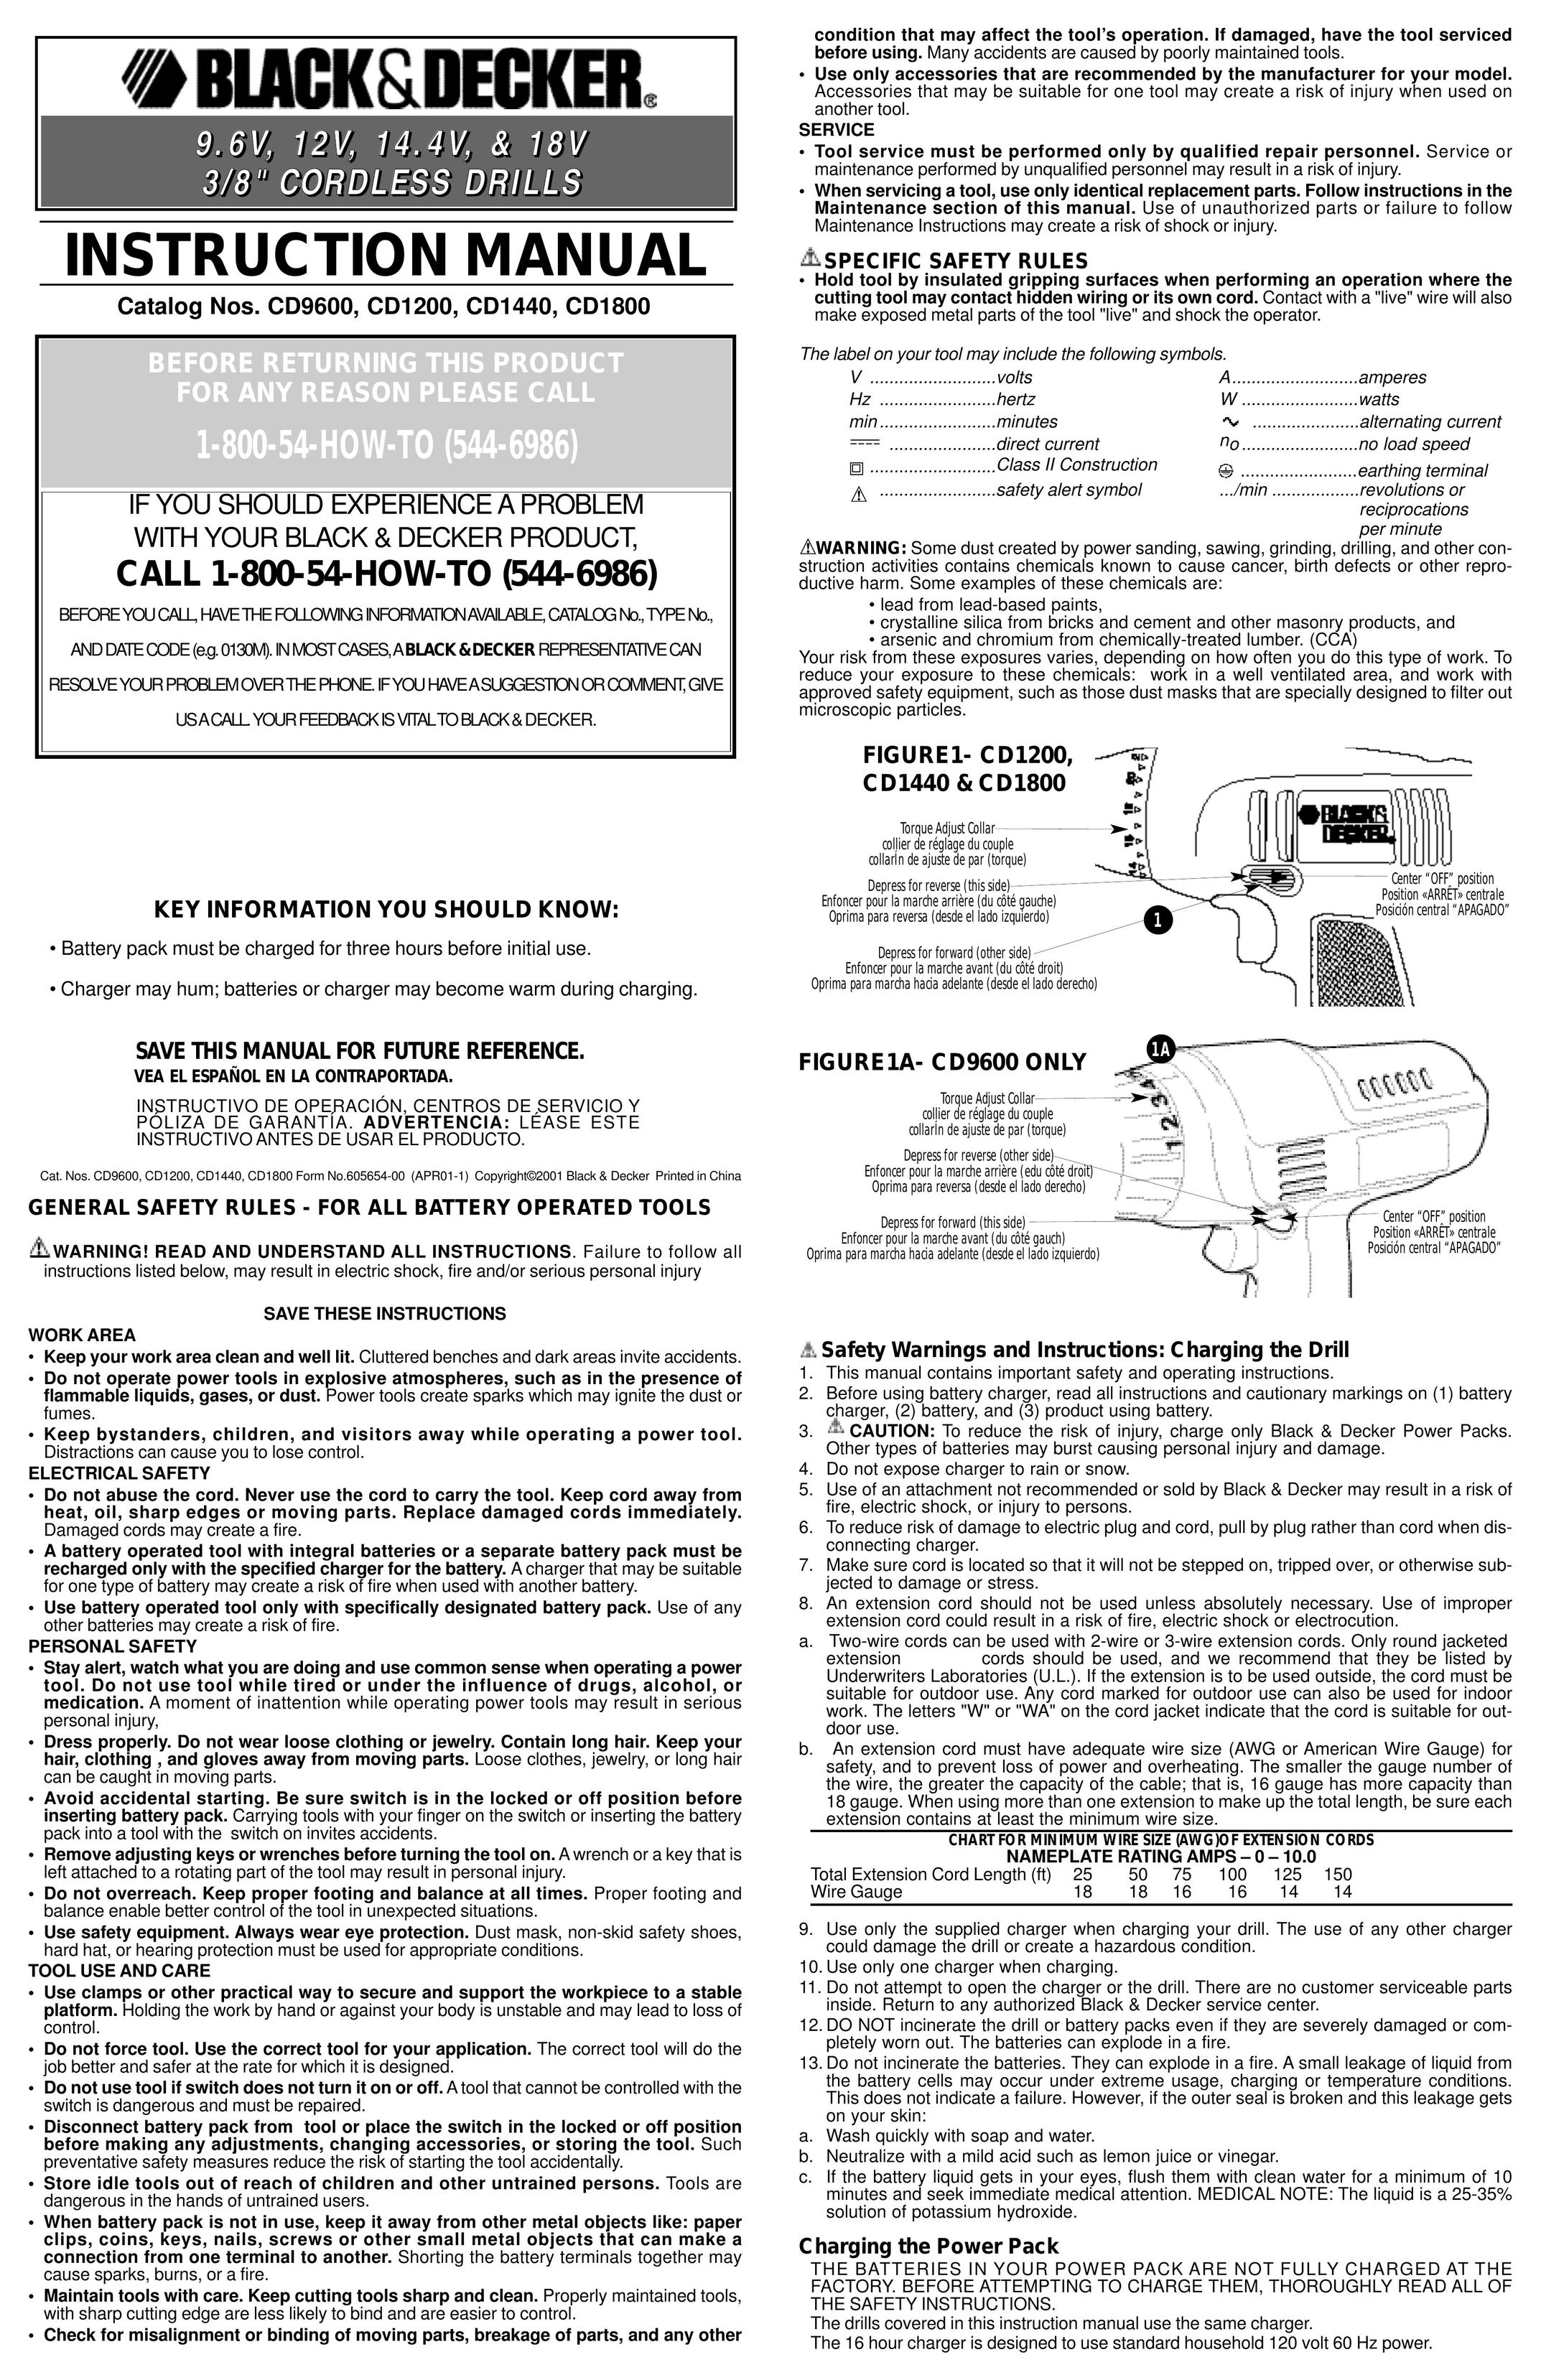 Black & Decker 605654-00 Cordless Drill User Manual